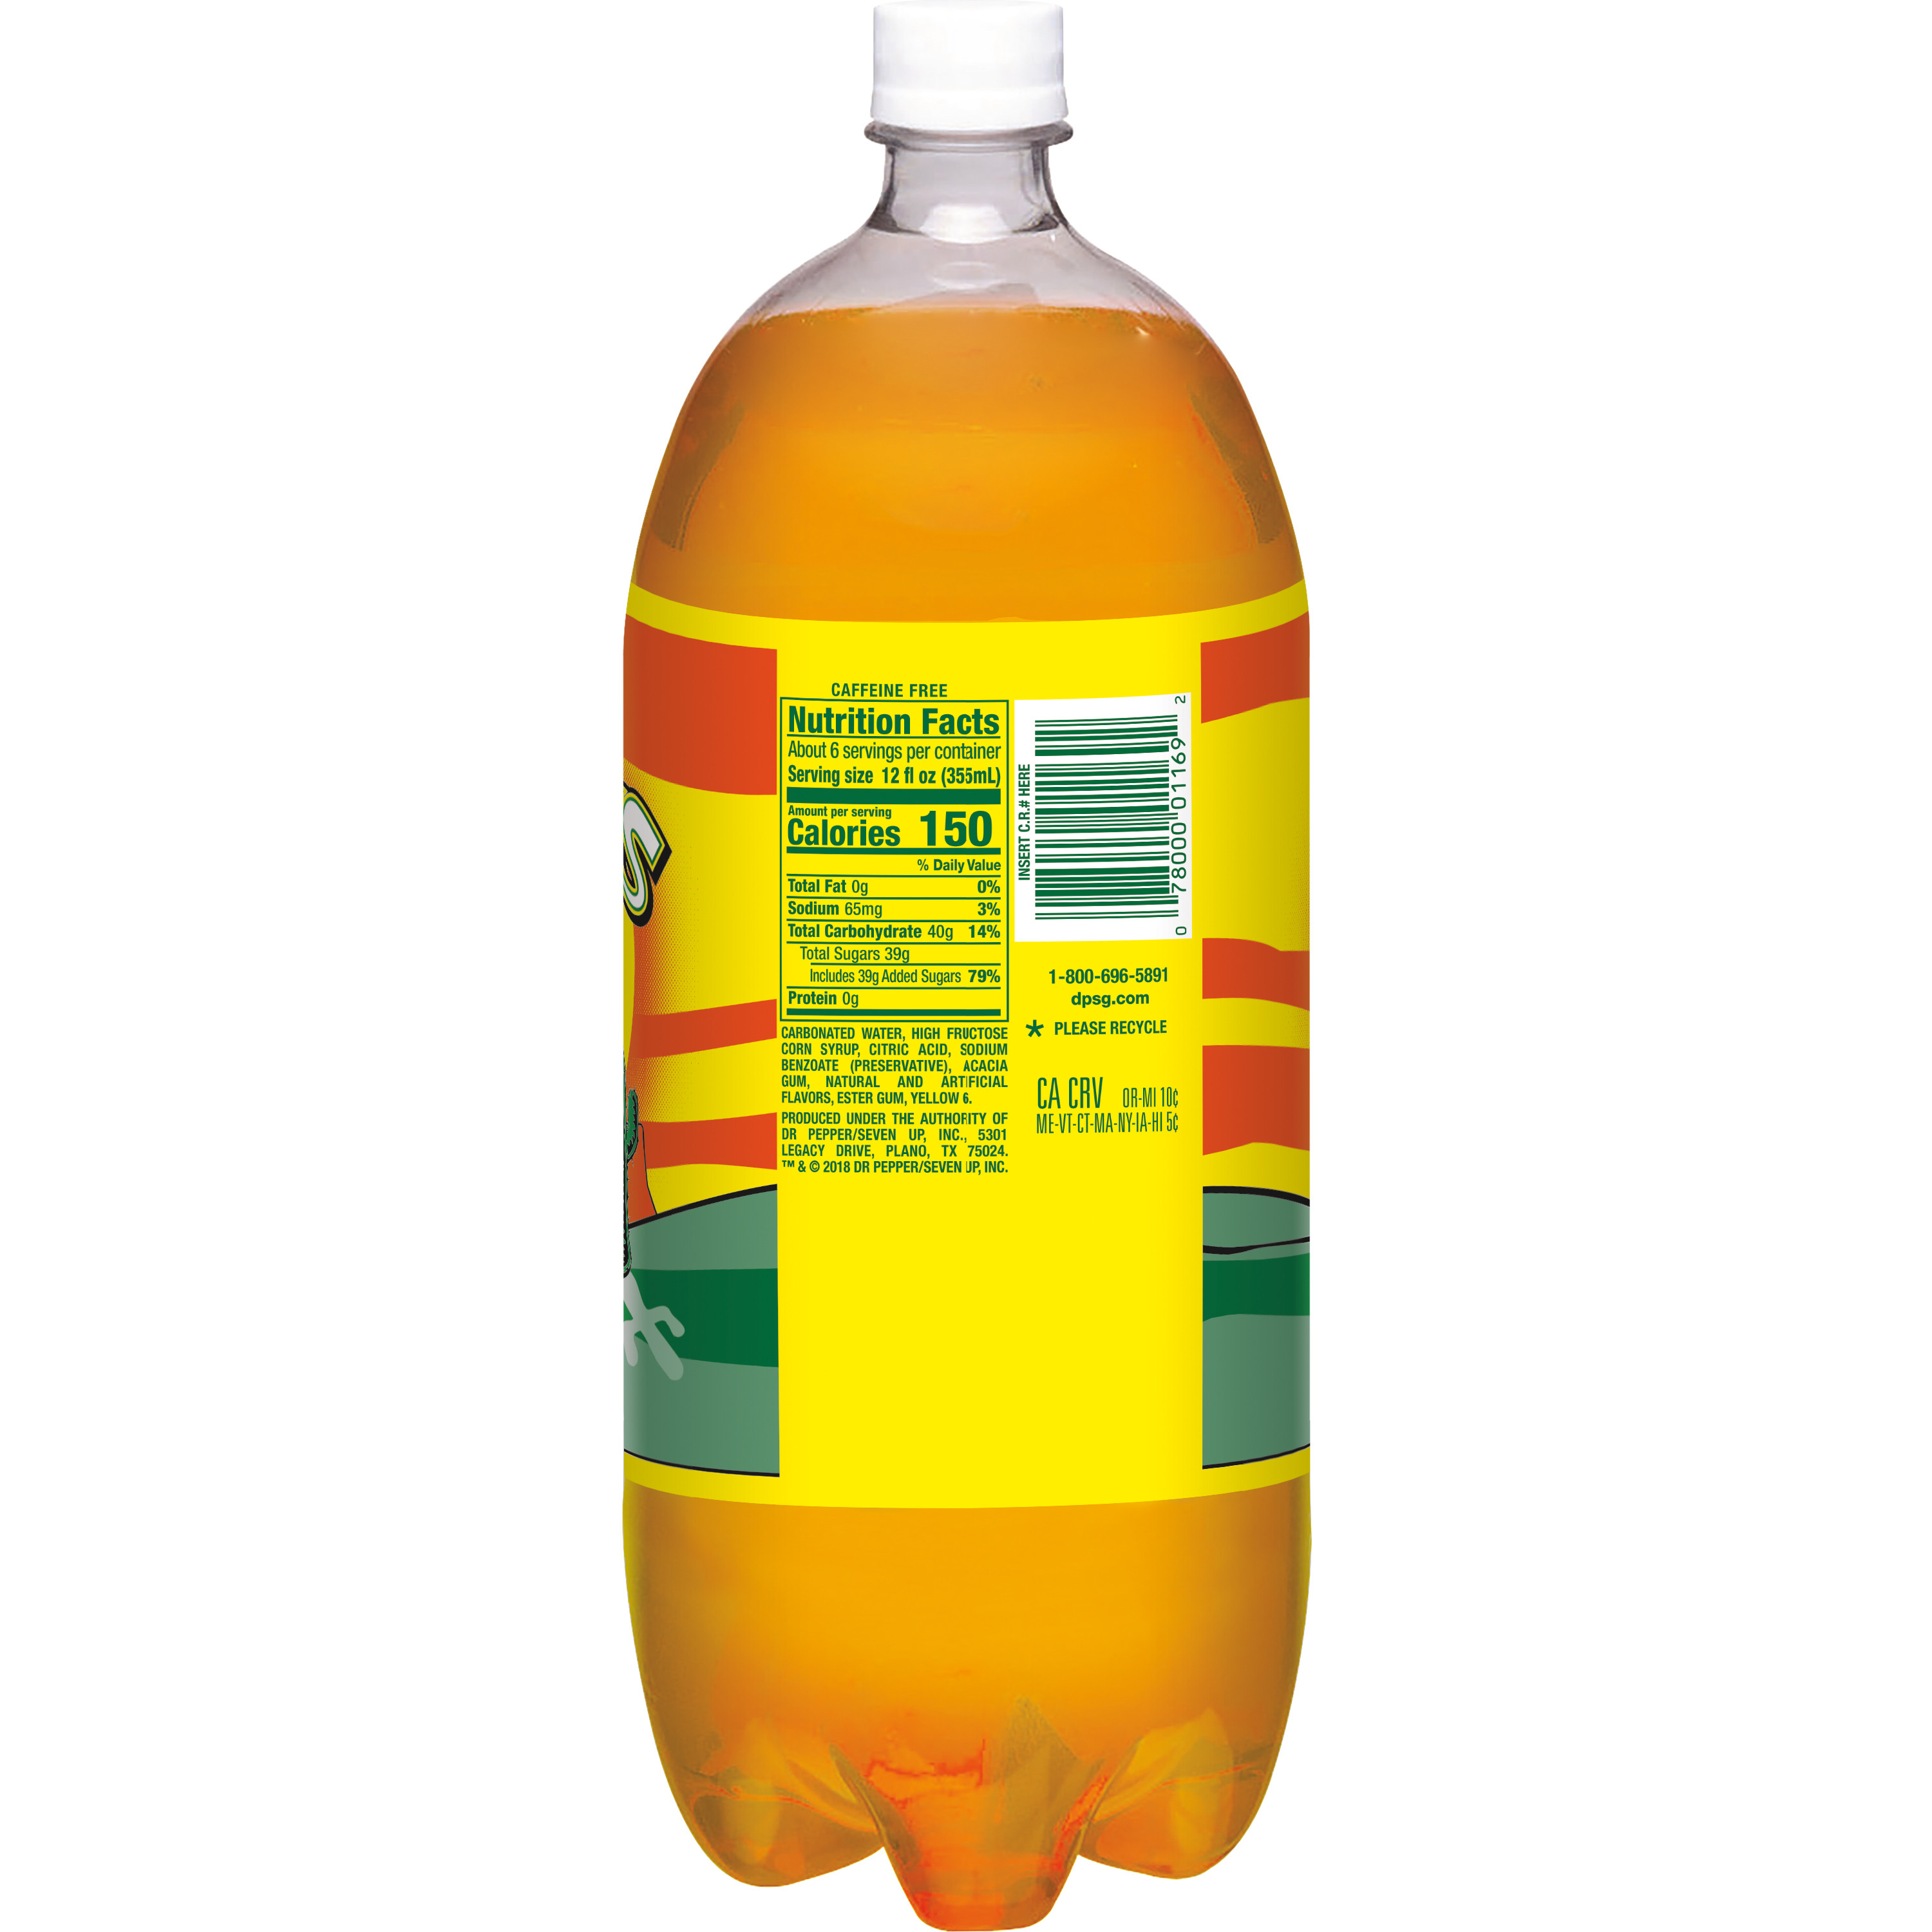 PAR TOY CO - Cactus Cooler Orange Pineapple Soda Pop 12oz Can - 24 Pack 